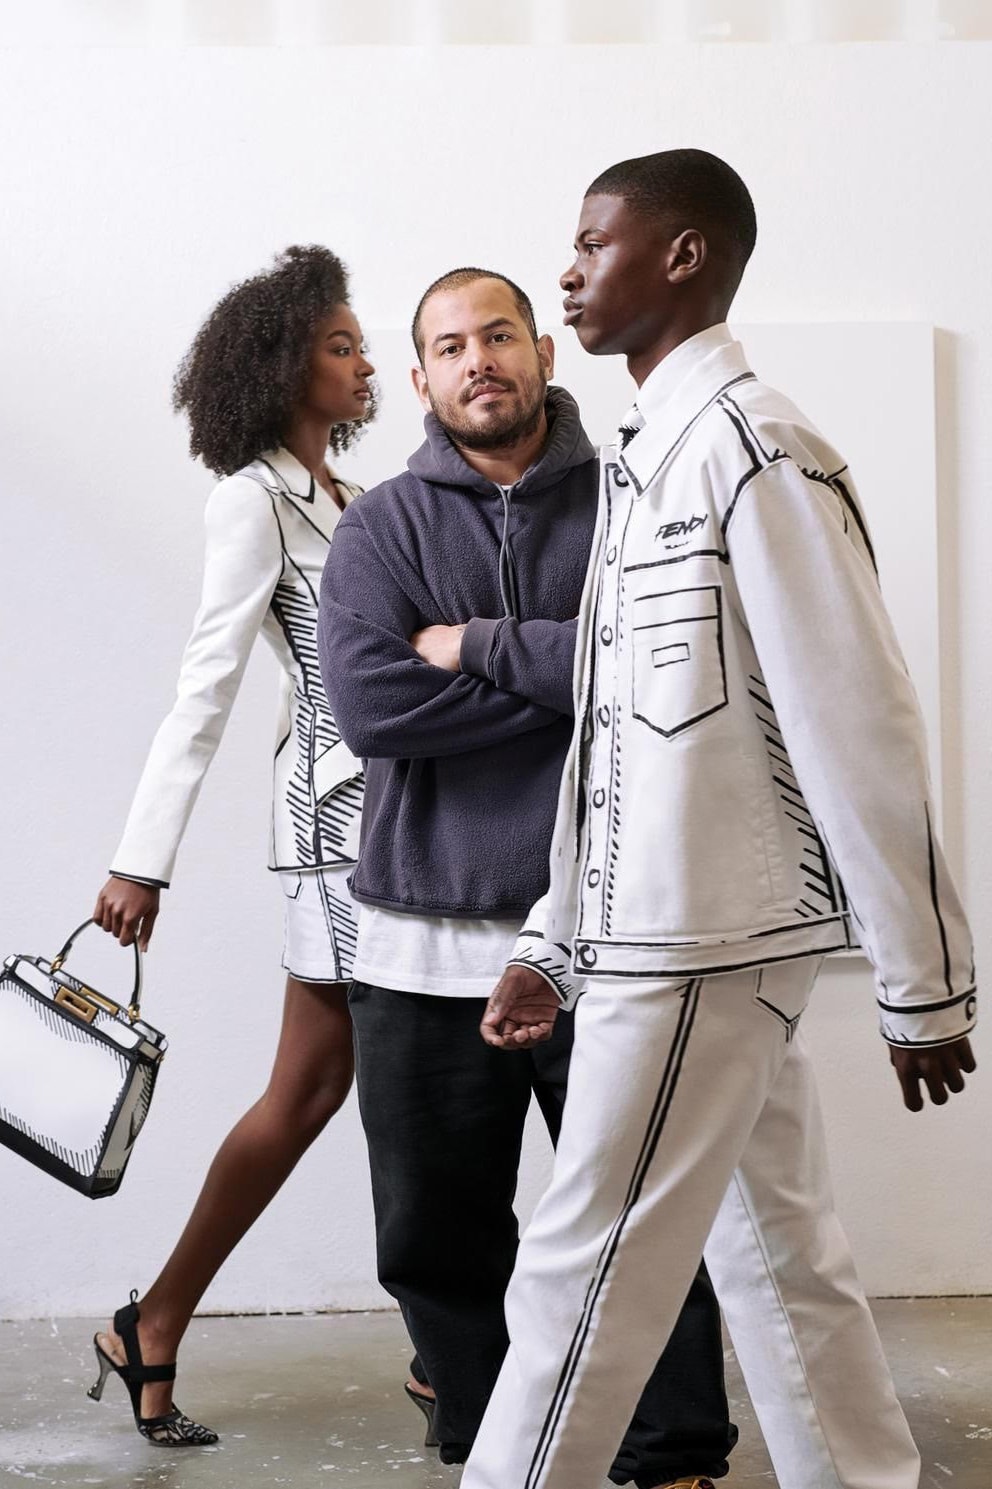 Fendi Joshua Vides artist collaboration bags jackets shirts sneakers blazers hats socks accessories